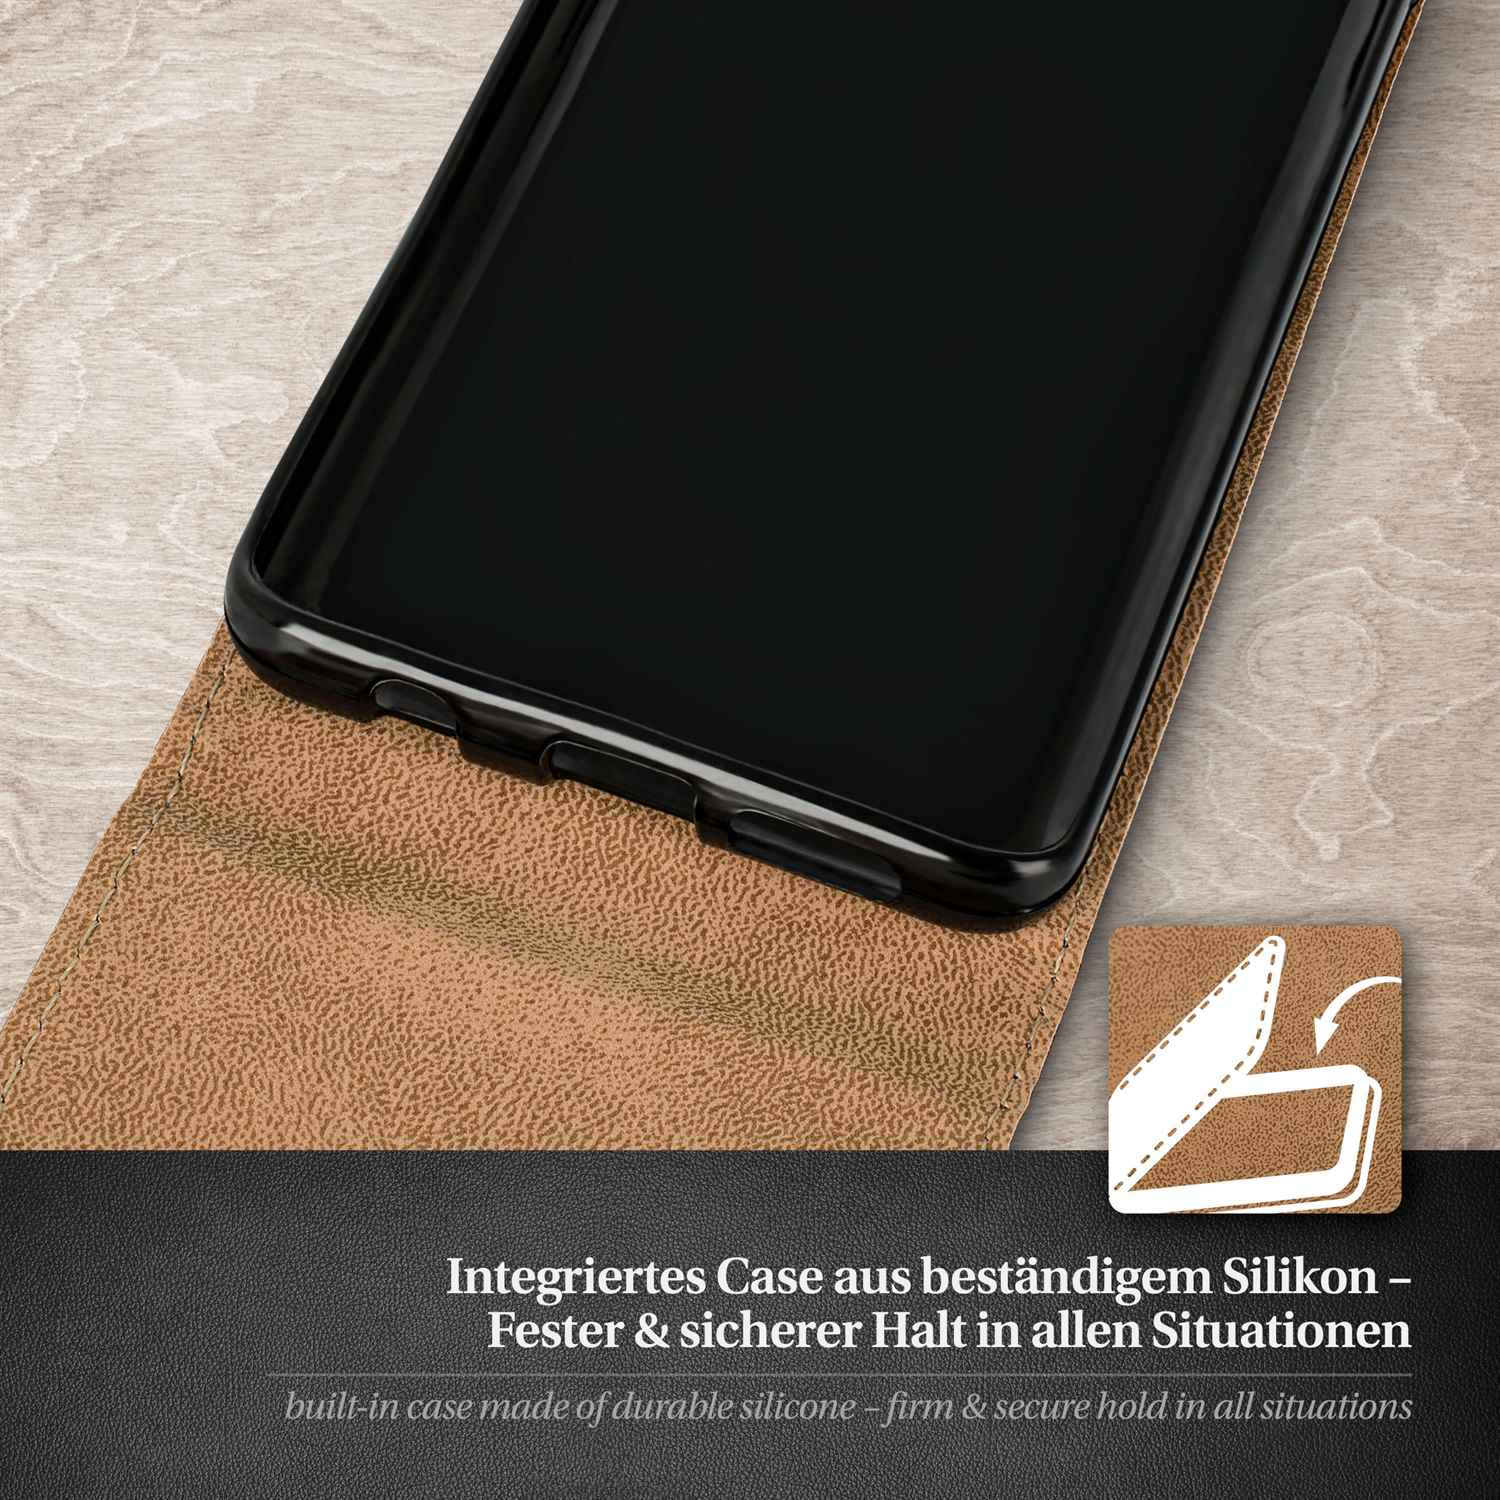 MOEX Flip Oxide-Brown Cover, Galaxy S20, Flip Case, Samsung